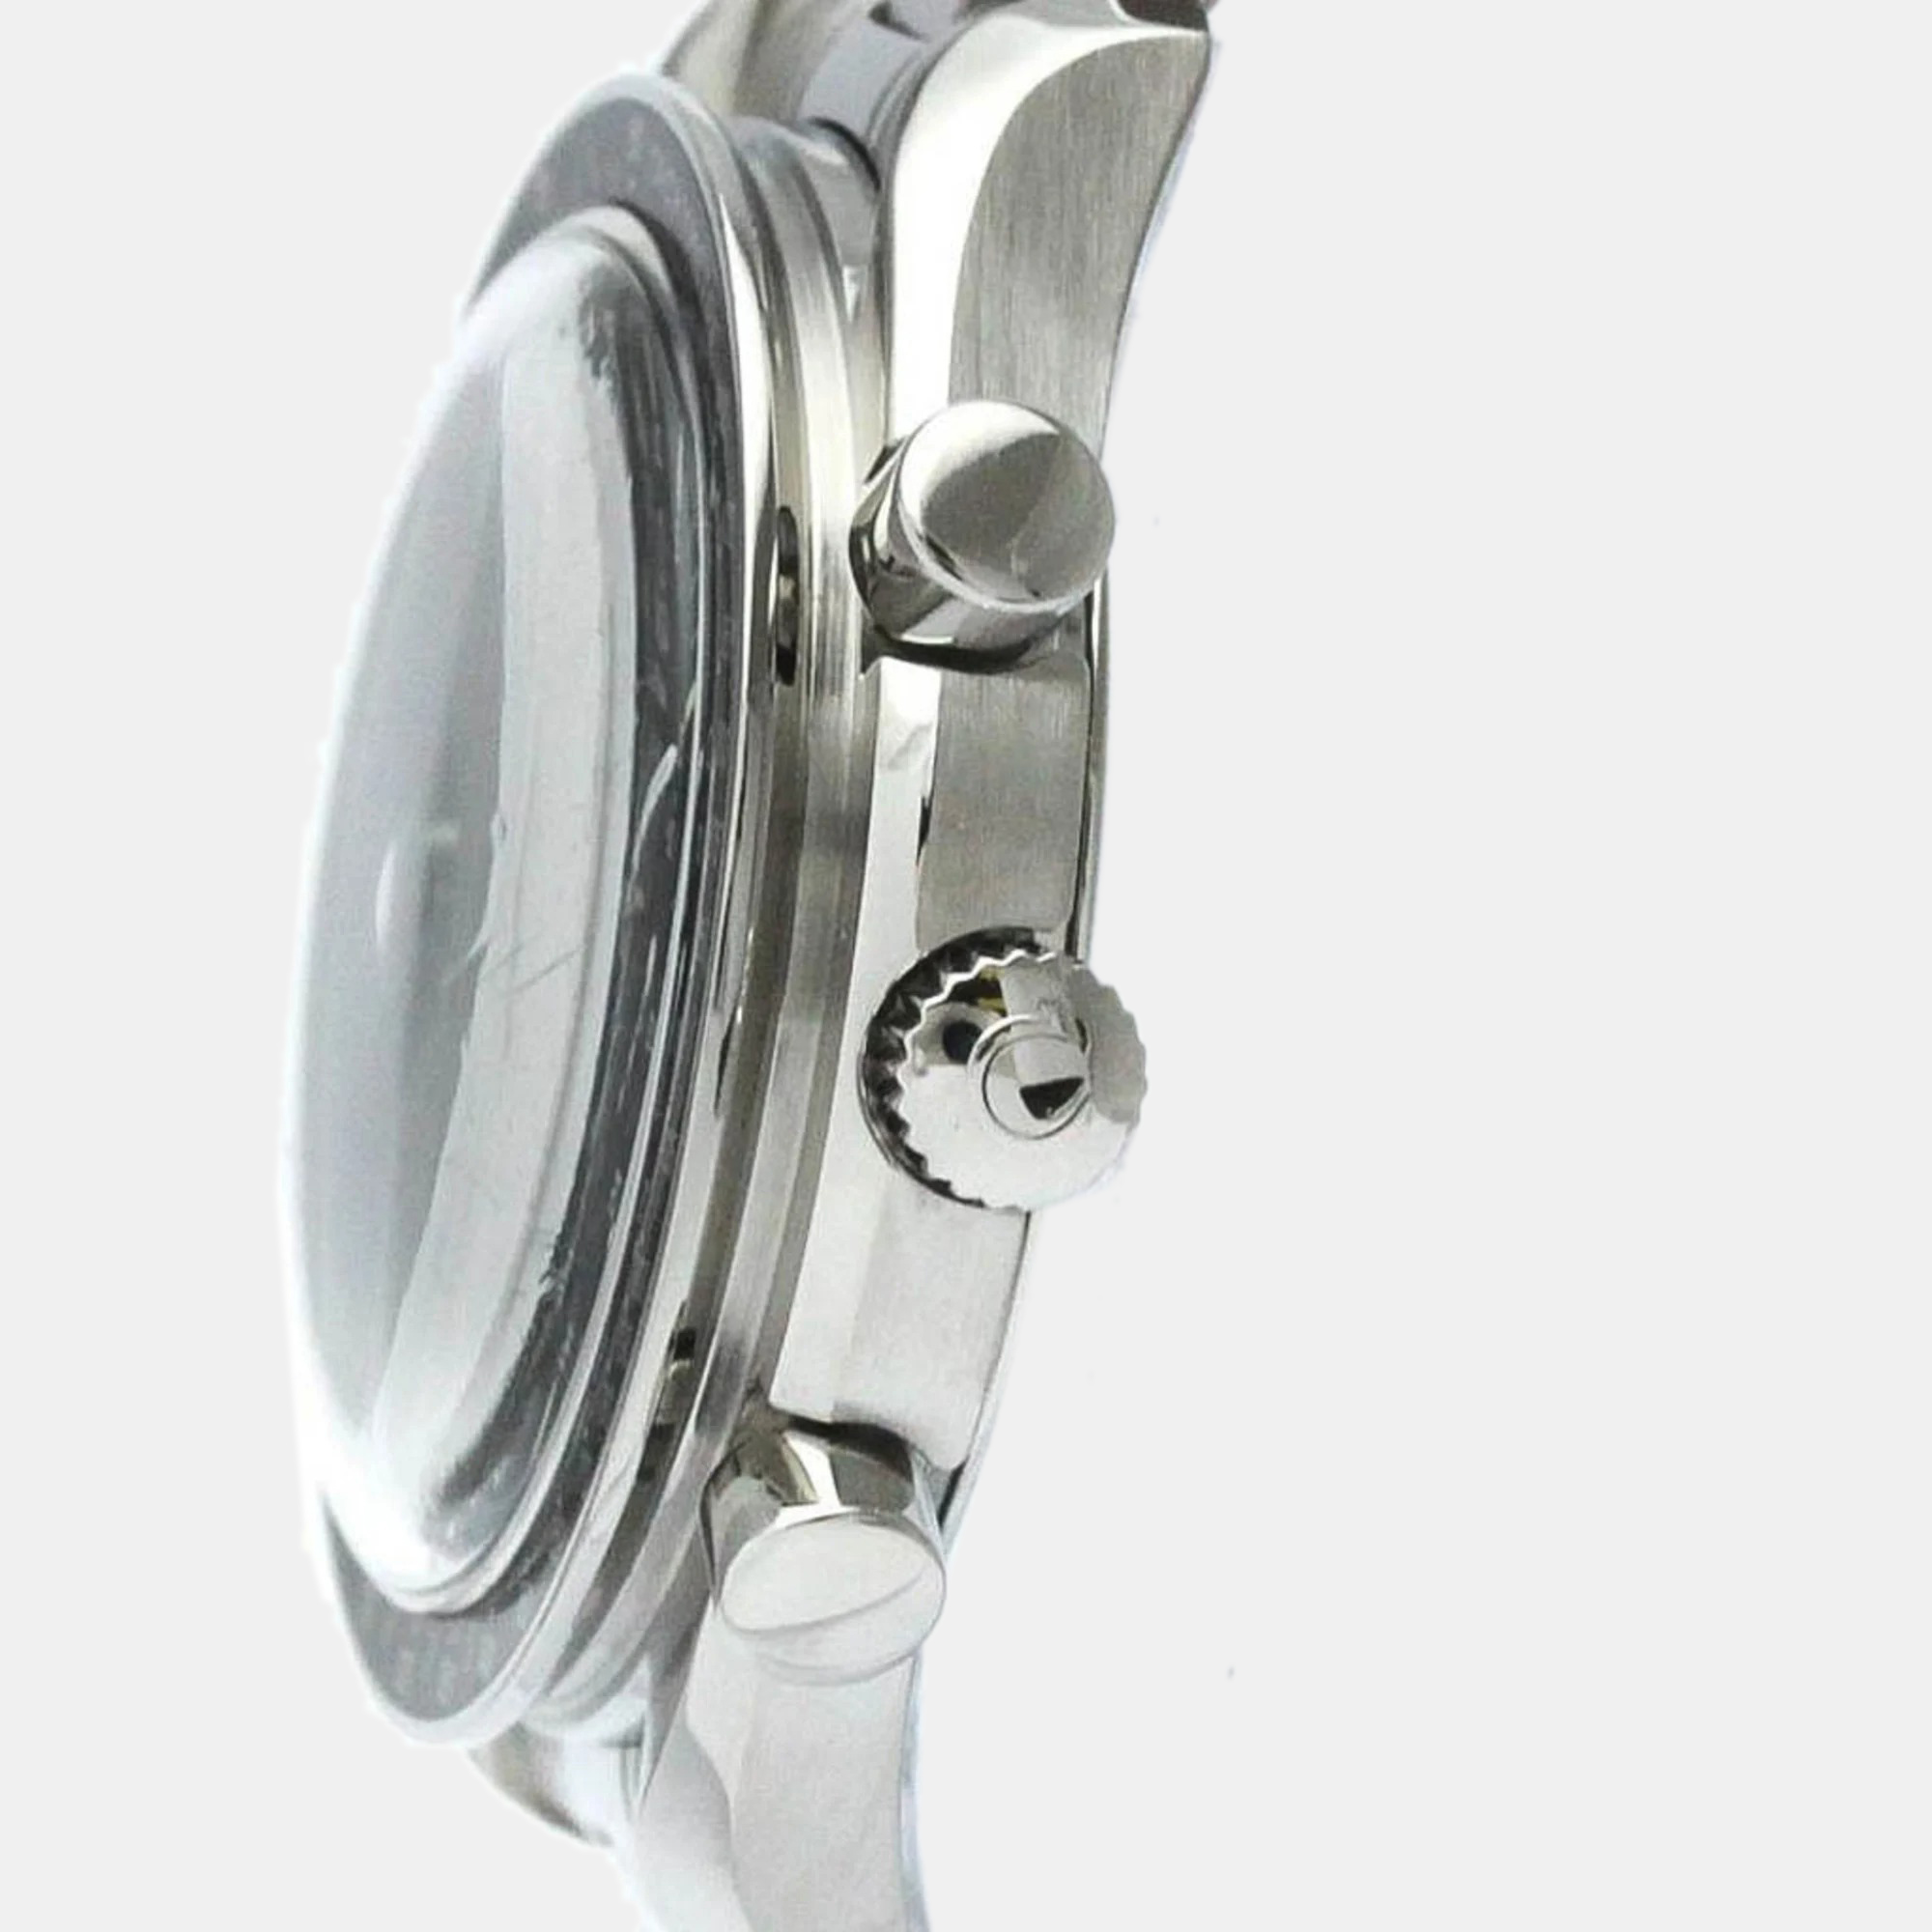 Omega Black Stainless Steel Speedmaster 3510.50 Automatic Men's Wristwatch 39 Mm